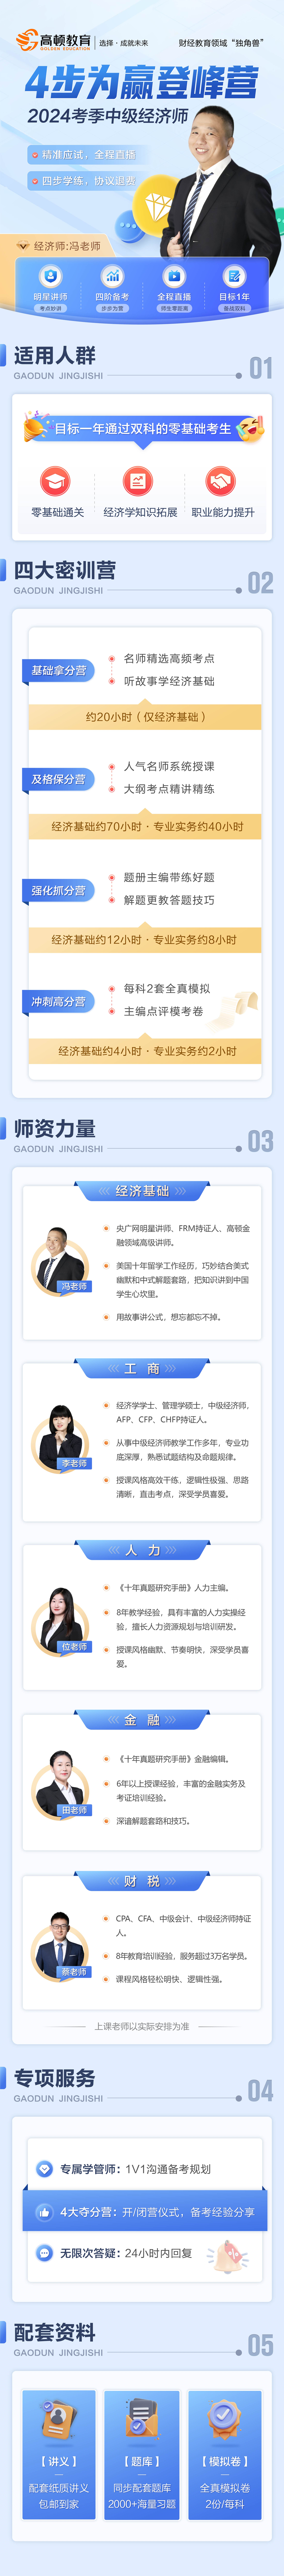 https://simg01.gaodunwangxiao.com/uploadfiles/product-center/202401/25/2a8a4_20240125162141.jpg